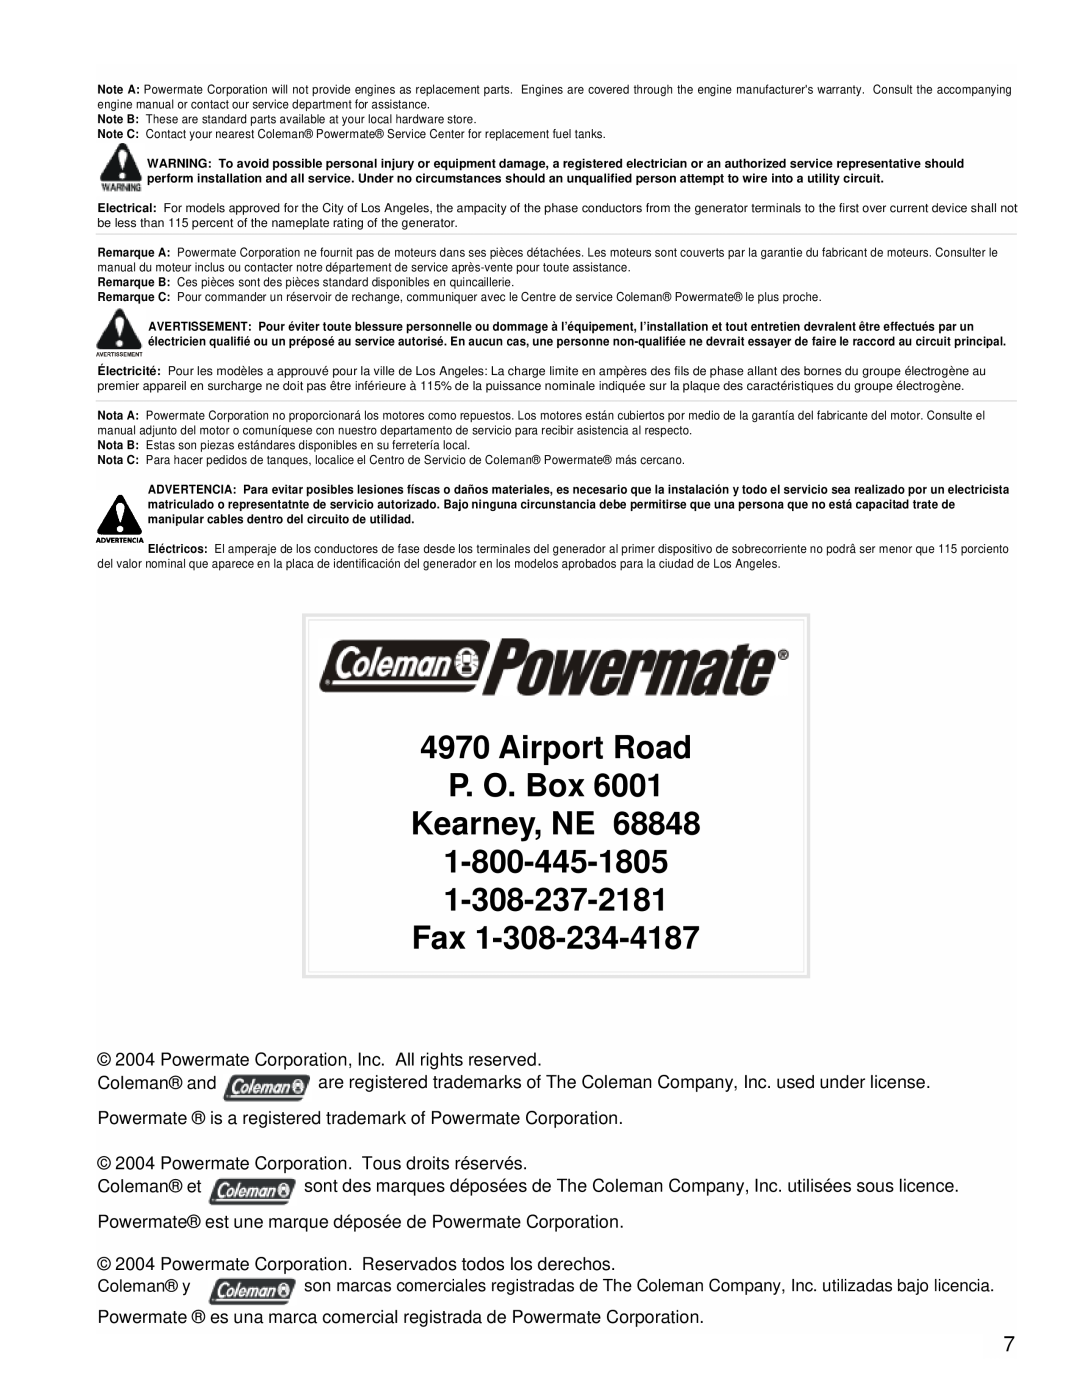 Powermate PMC525300 manual Airport Road P. O. Box Kearney, NE, Powermate Corporation, Inc. All rights reserved, Coleman y 